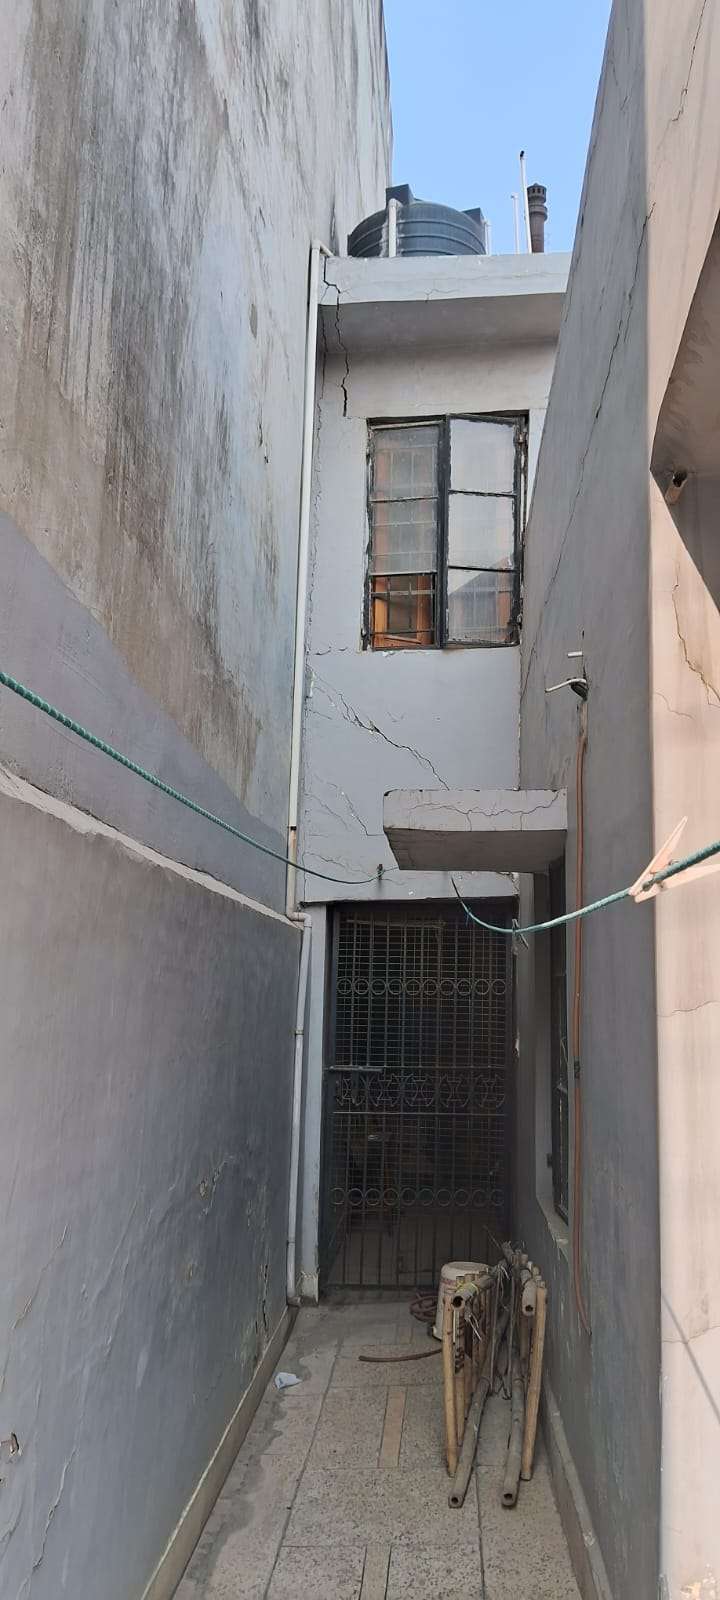 4 Bedroom 153 Sq.Mt. Independent House in Nehru Nagar Ghaziabad